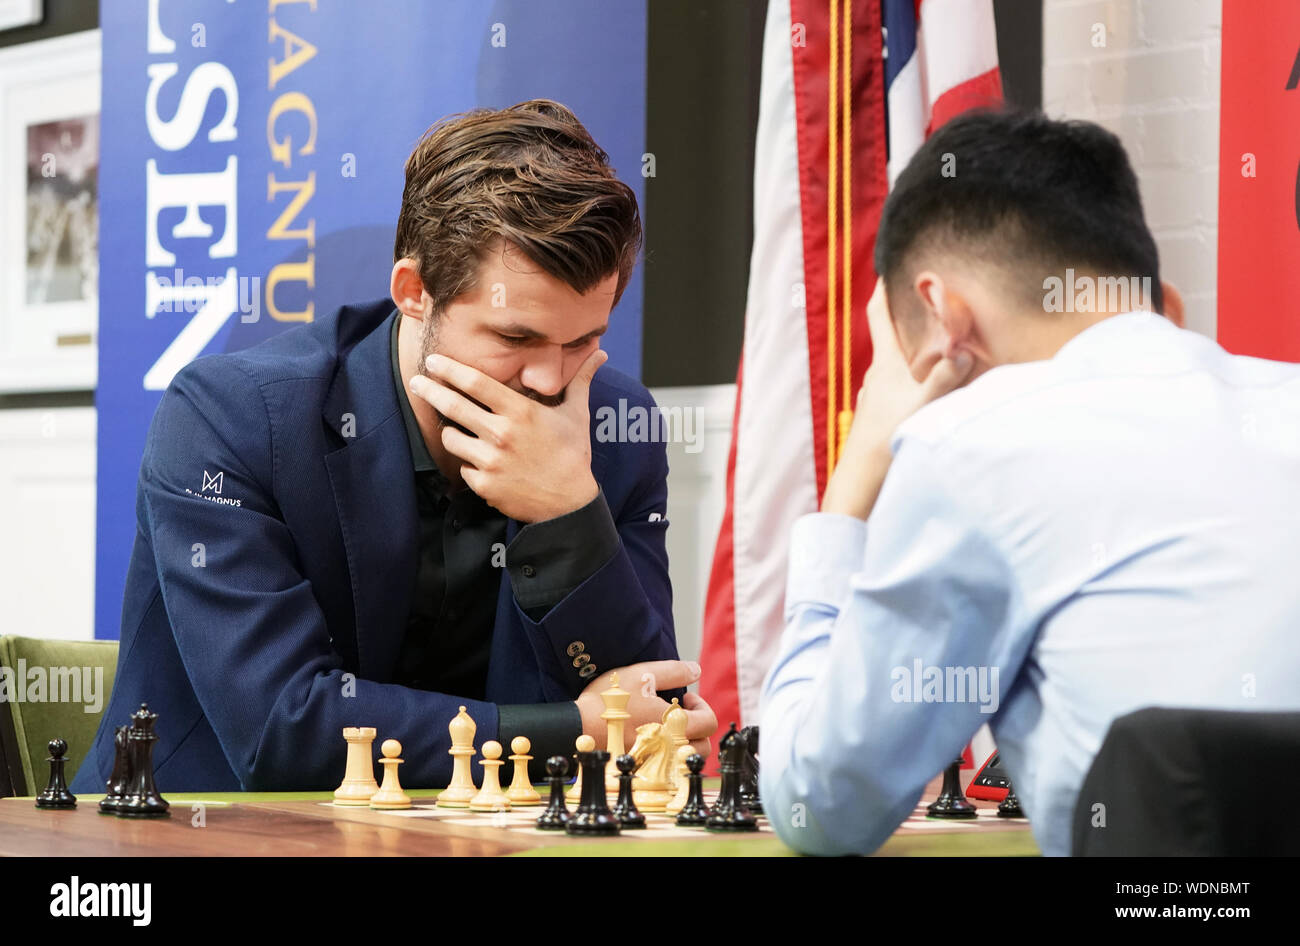 Ding Liren Beats Magnus Carlsen In Playoff 